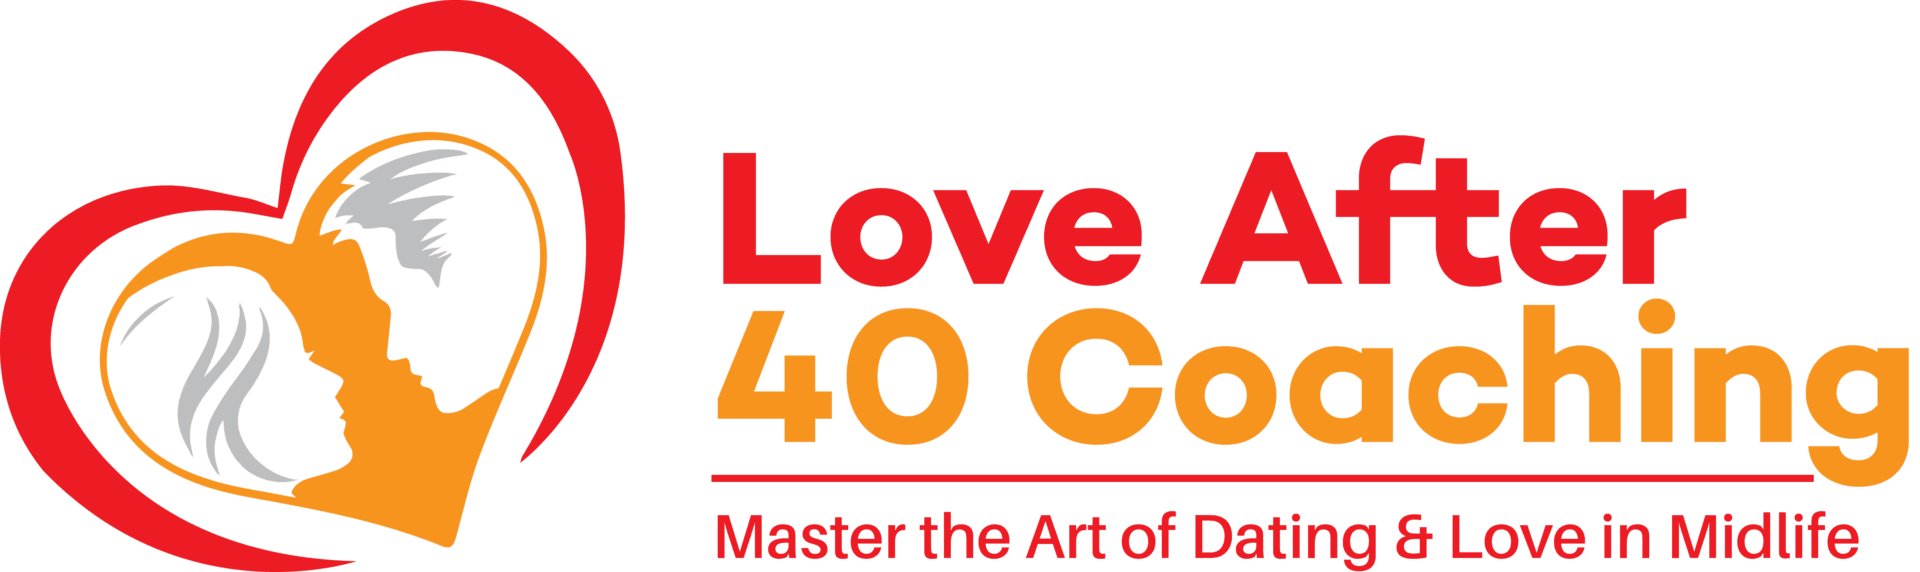 Love After 40 Coaching logo